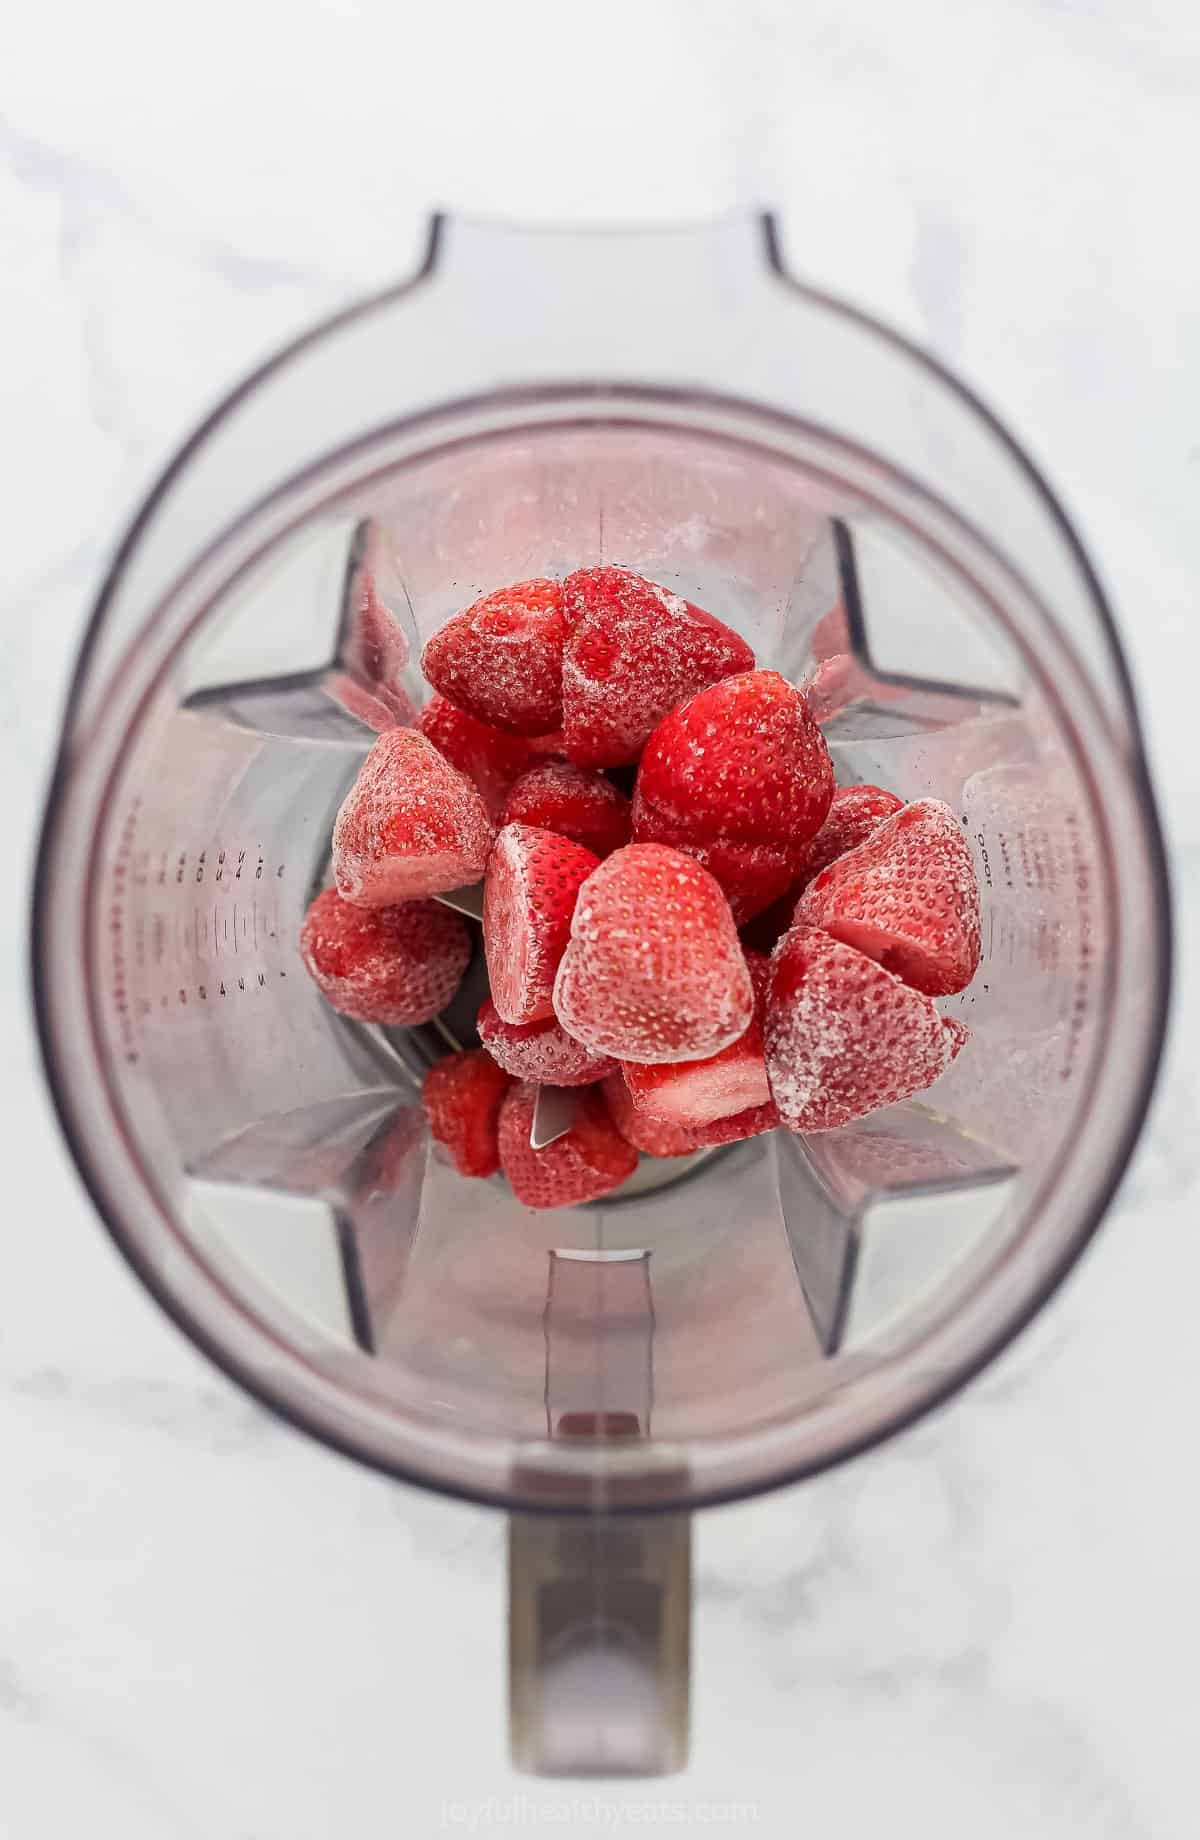 Frozen strawberries in a blender